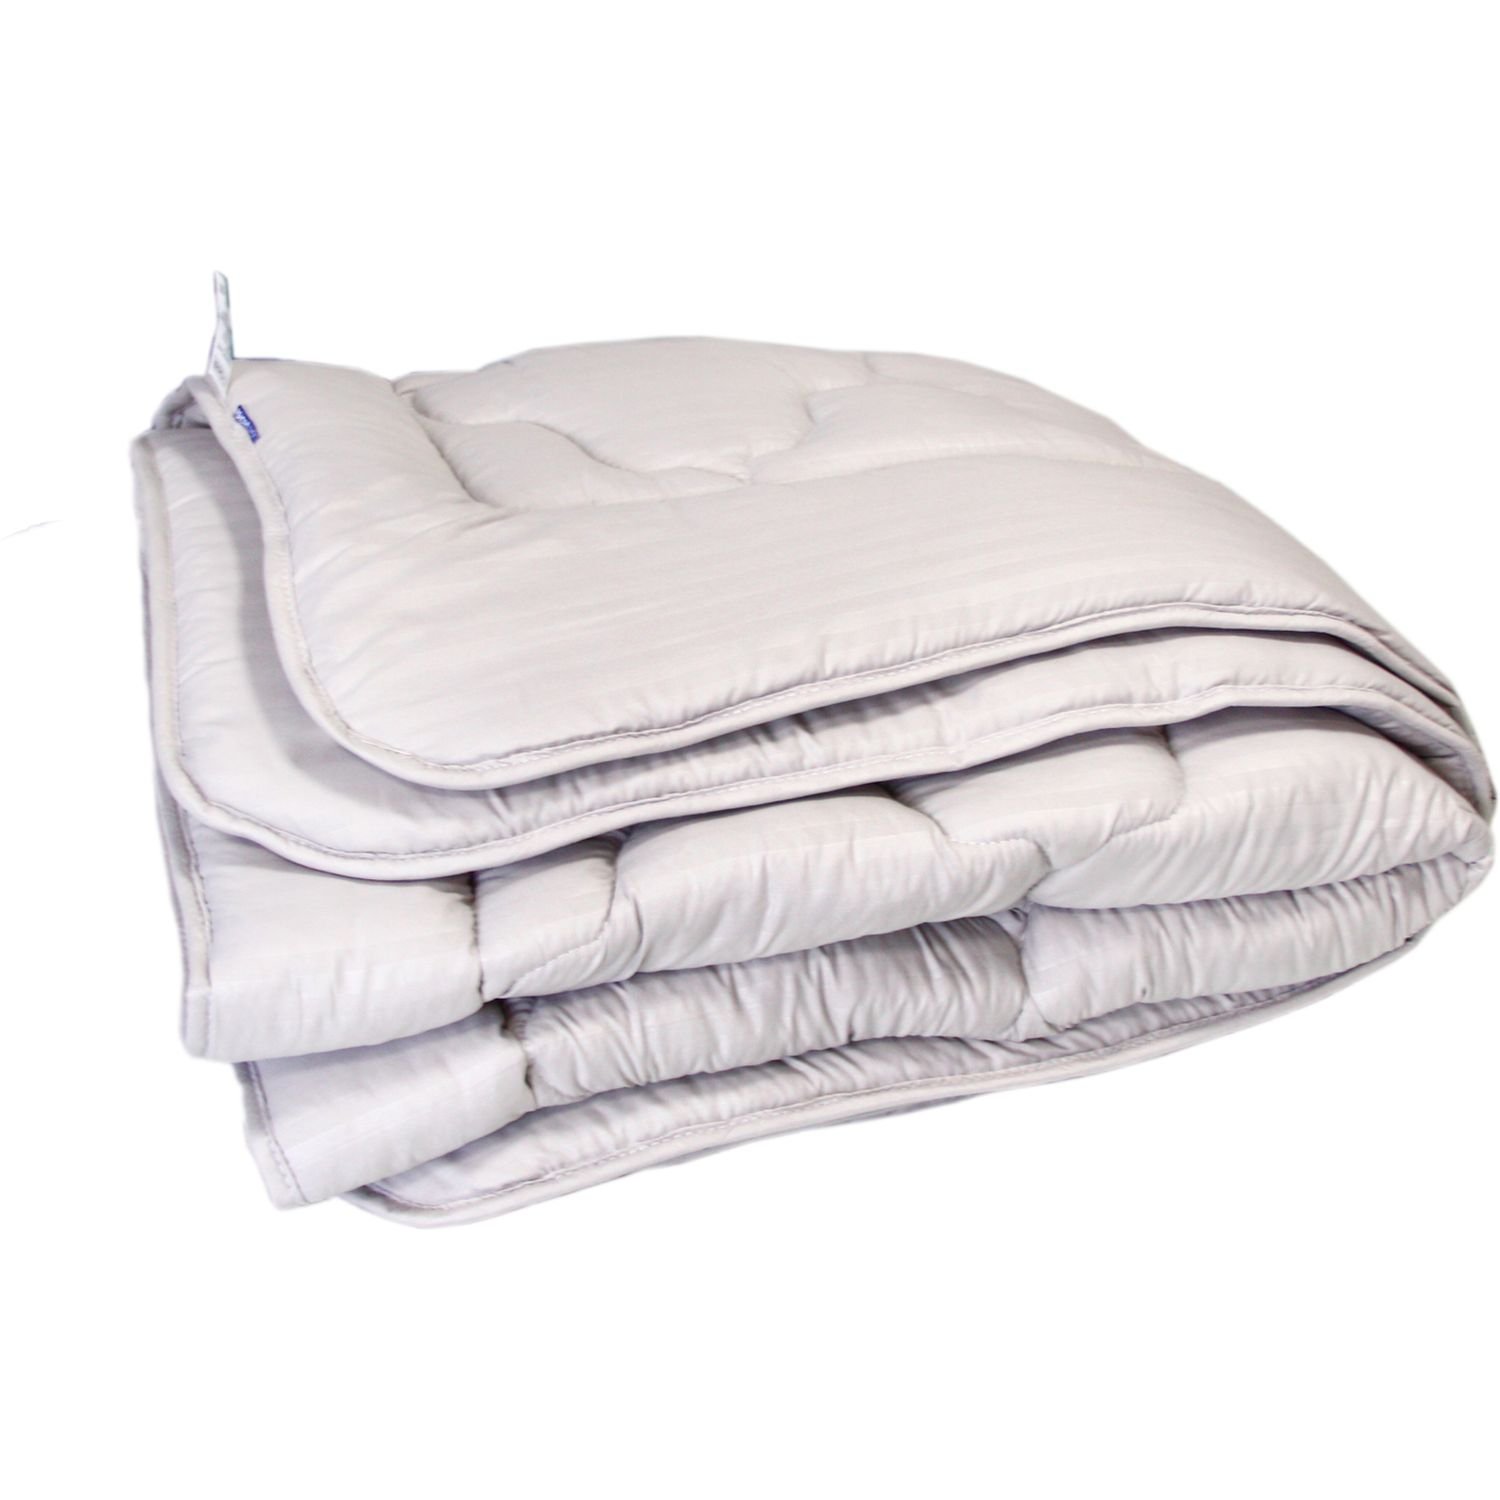 Одеяло LightHouse Soft Line Mf Stripe grey, 140х210 см, серое (602244) - фото 1